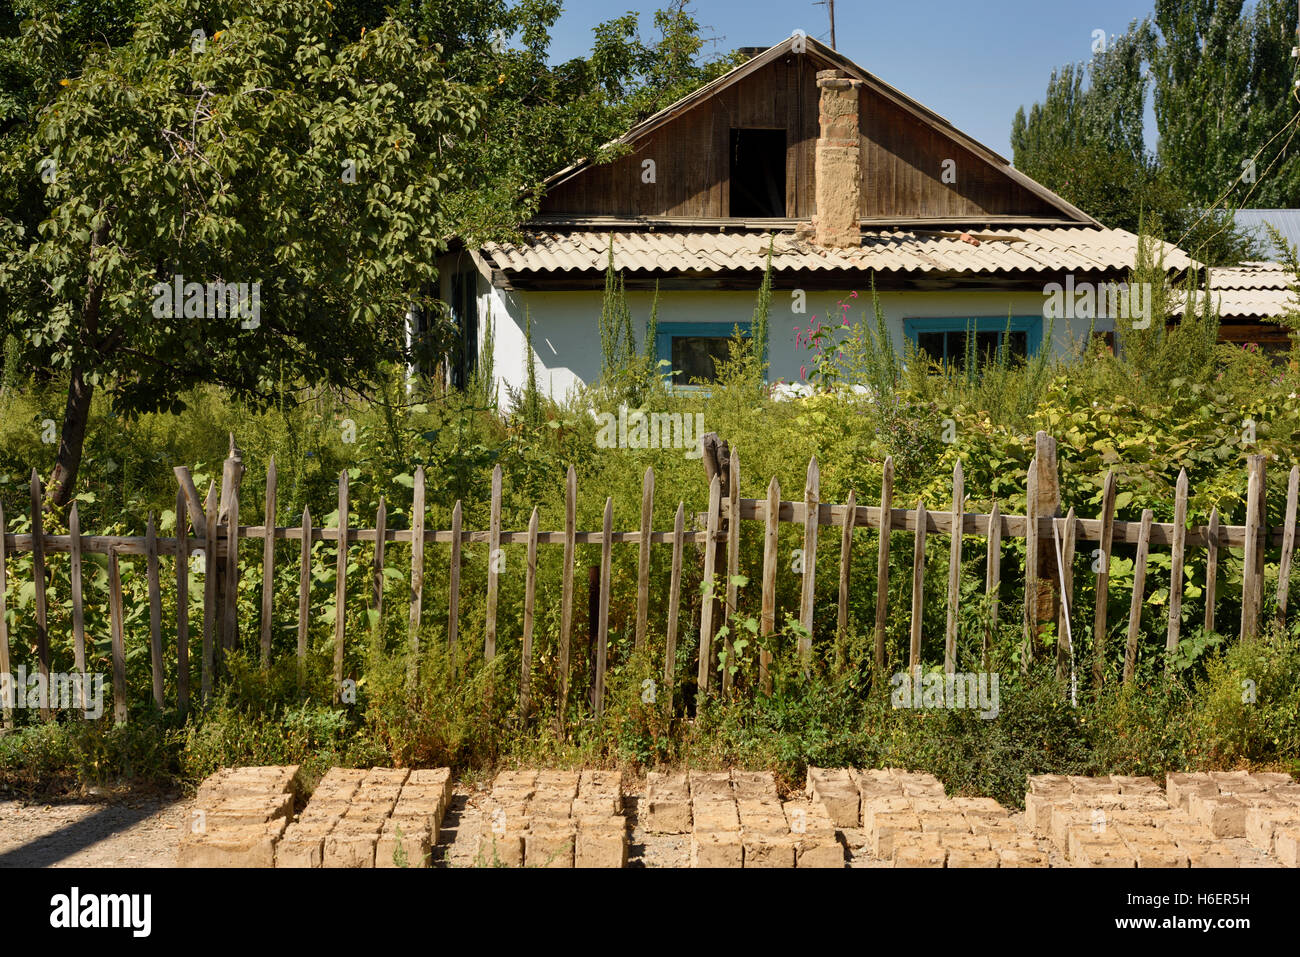 House with picket fence and mud bricks in Kalinino Basshy village Kazakhstan Stock Photo